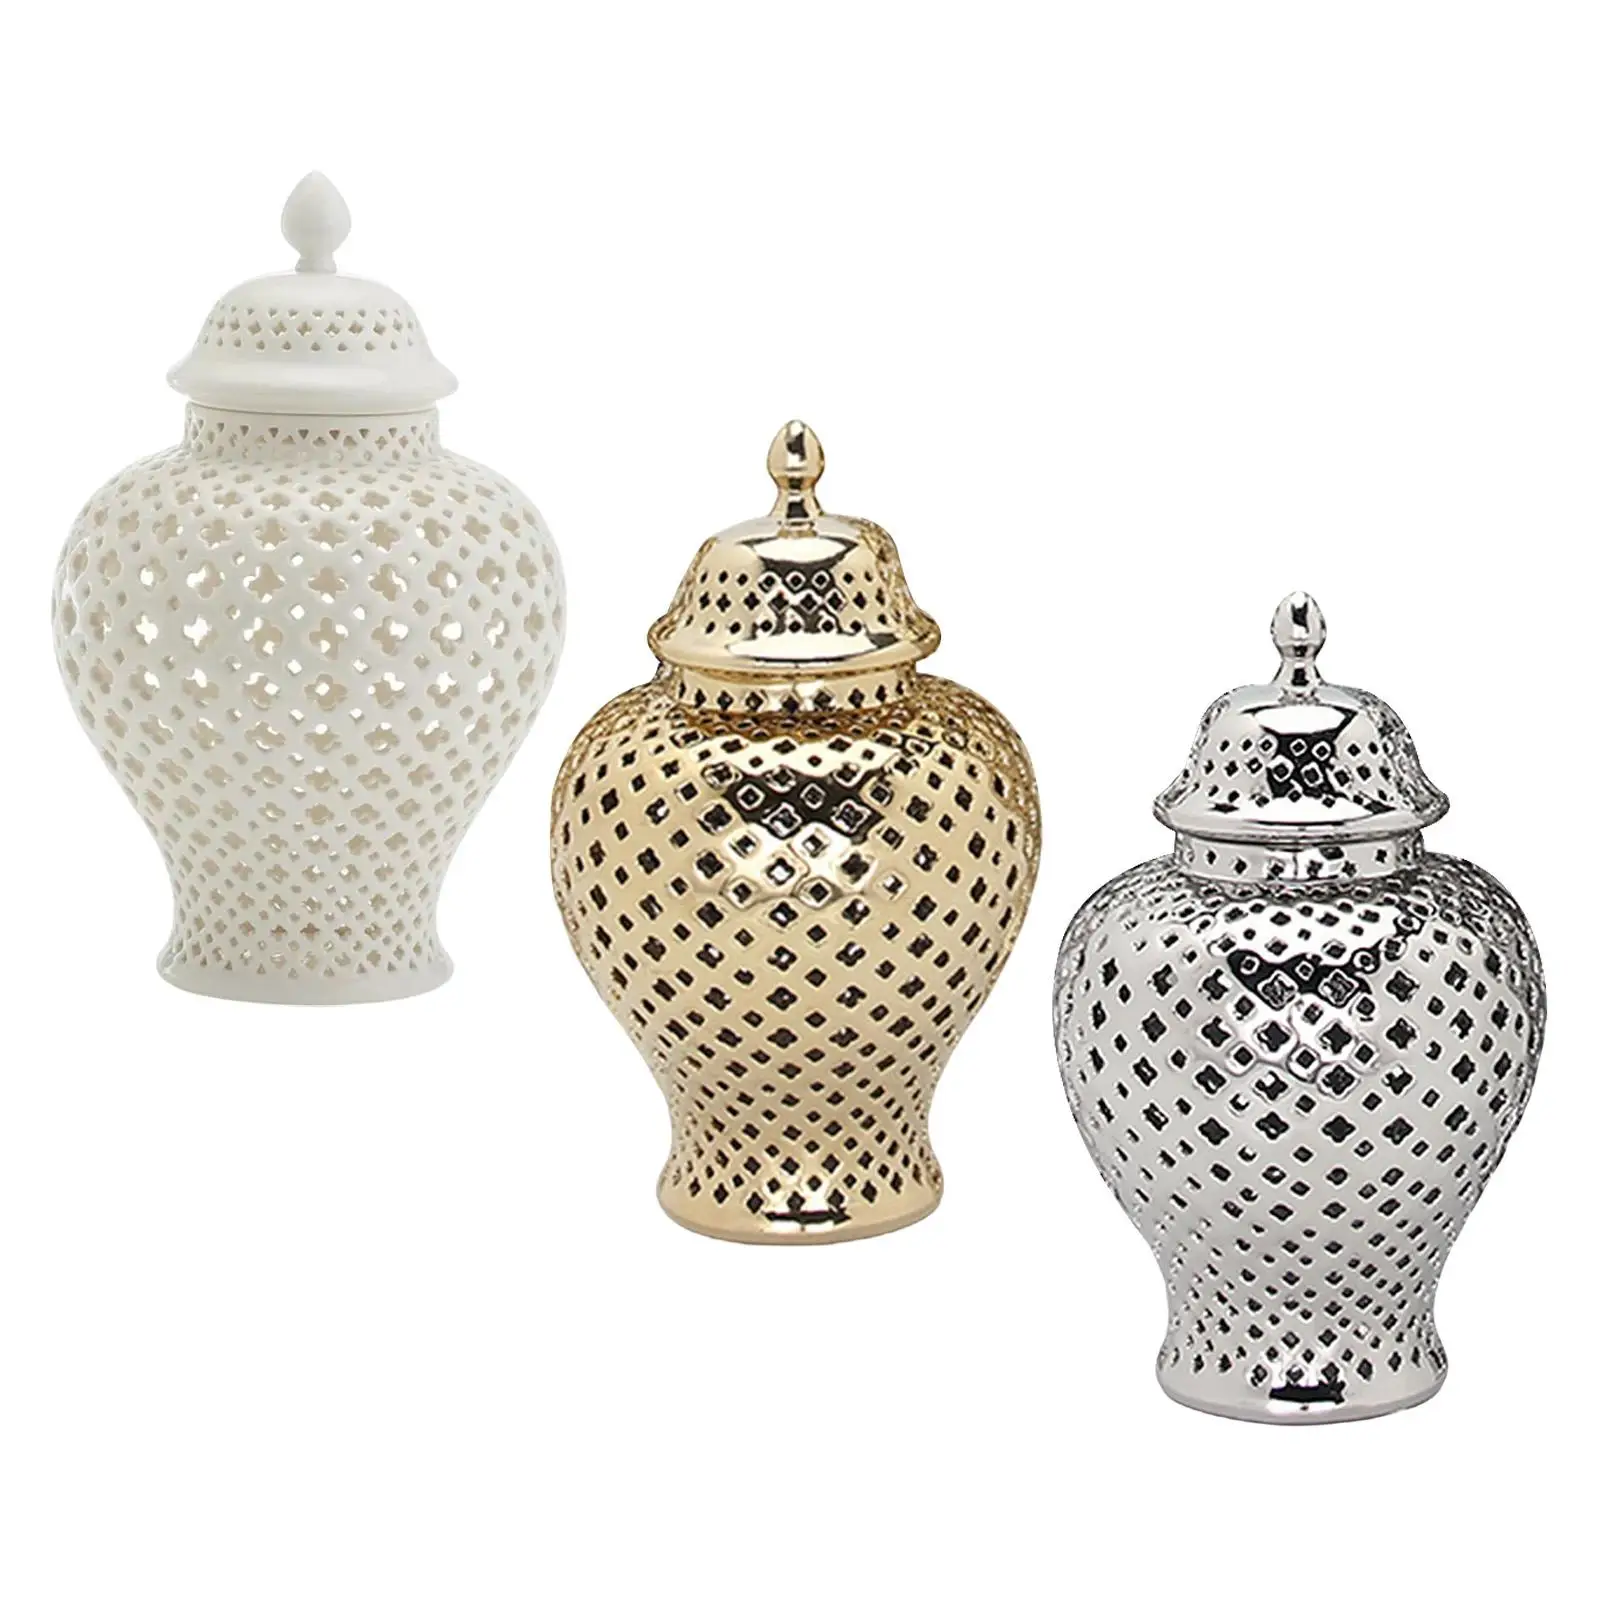 Light Luxury Ceramic Ginger Jar Ornaments Storage Jars Crafts Carved Lattice Accessories for Living Room Home Gift Decoration